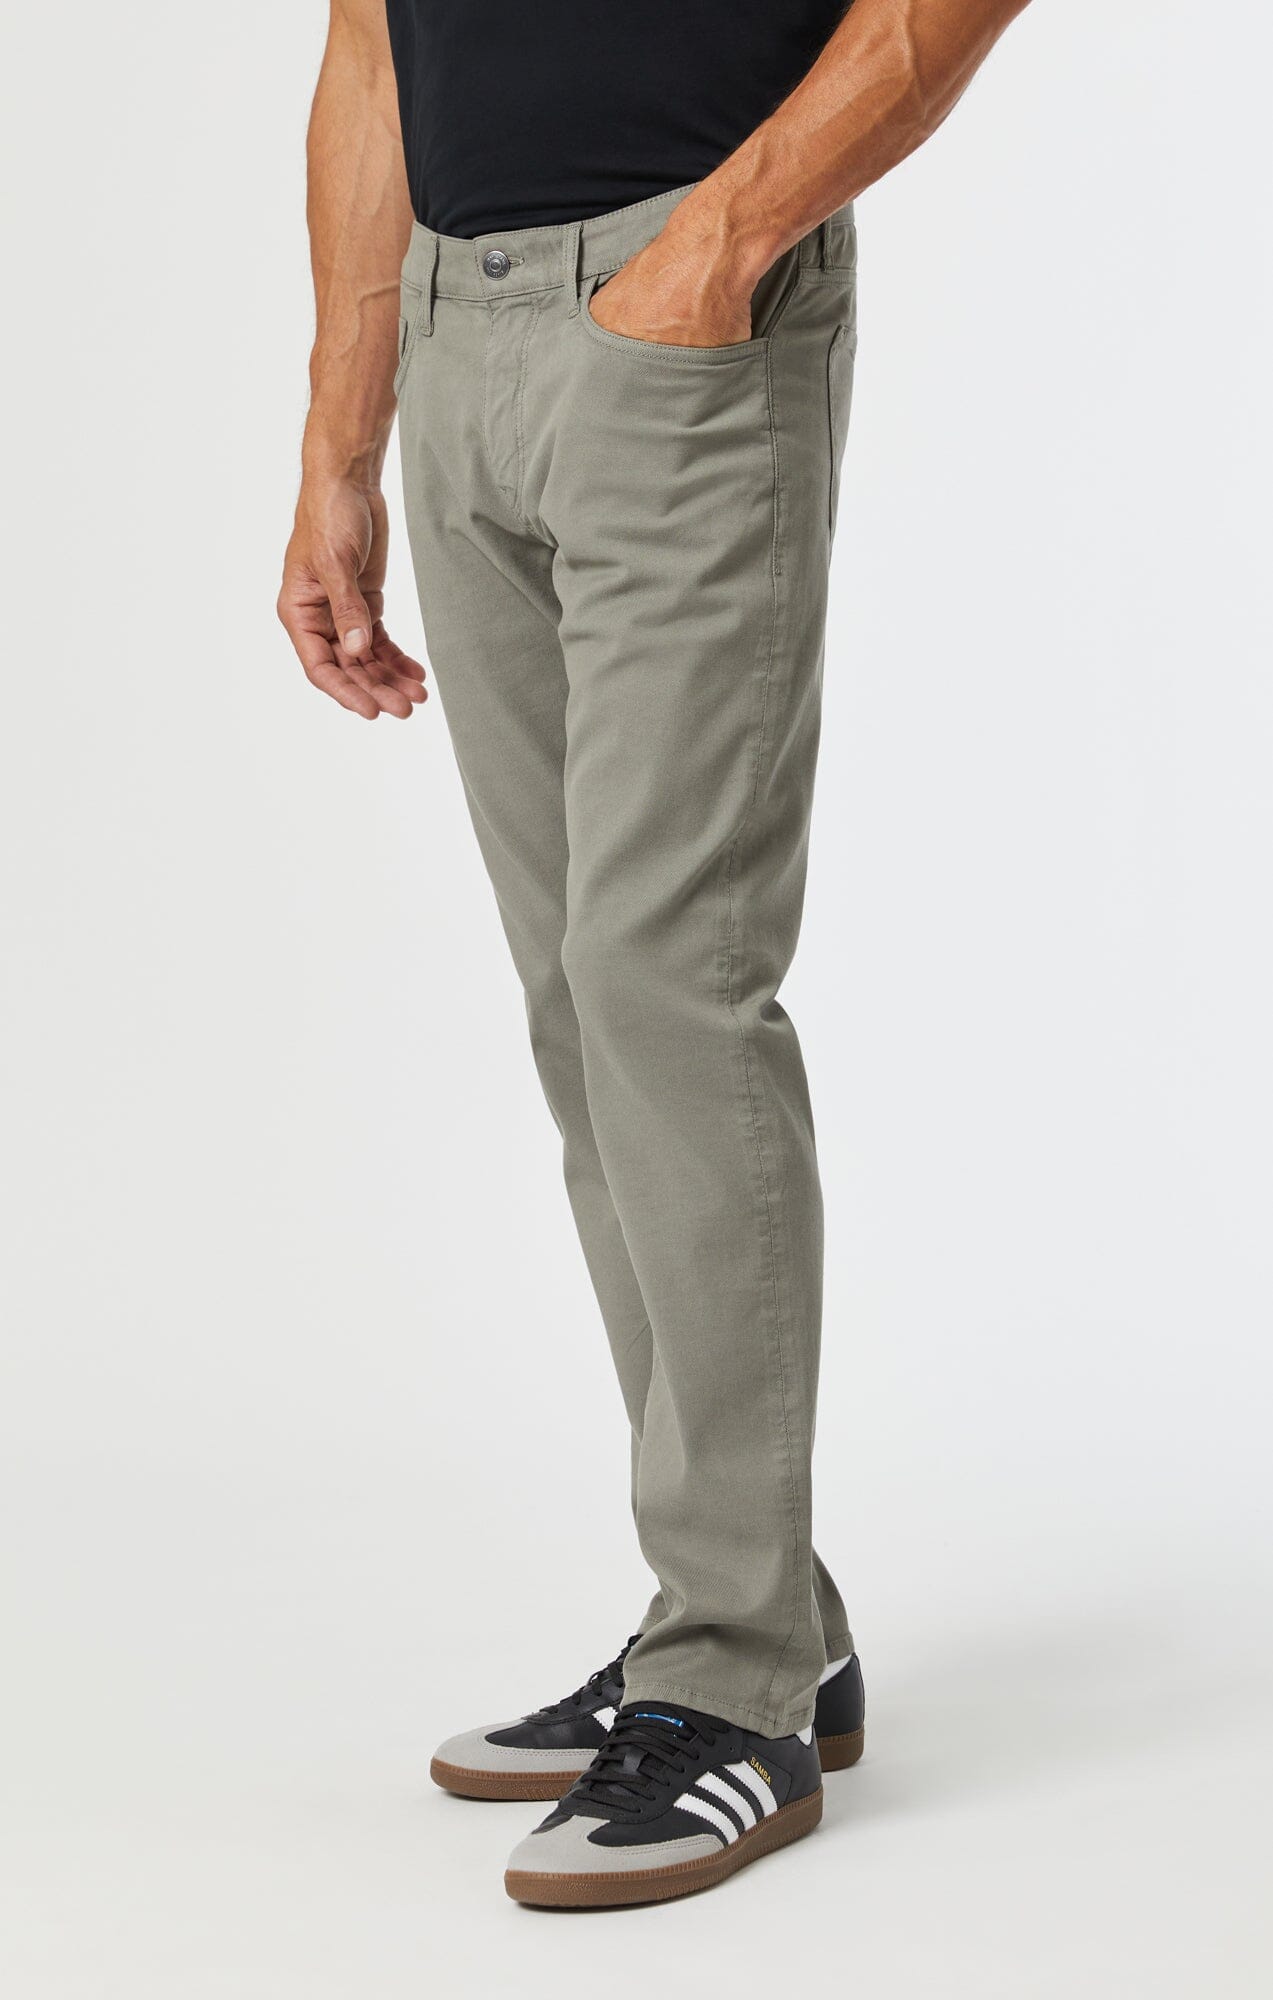 Men's Stretchy Slim Fit Straight Pants | Mens pants casual, Slim fit formal  pants, Mens dress pants